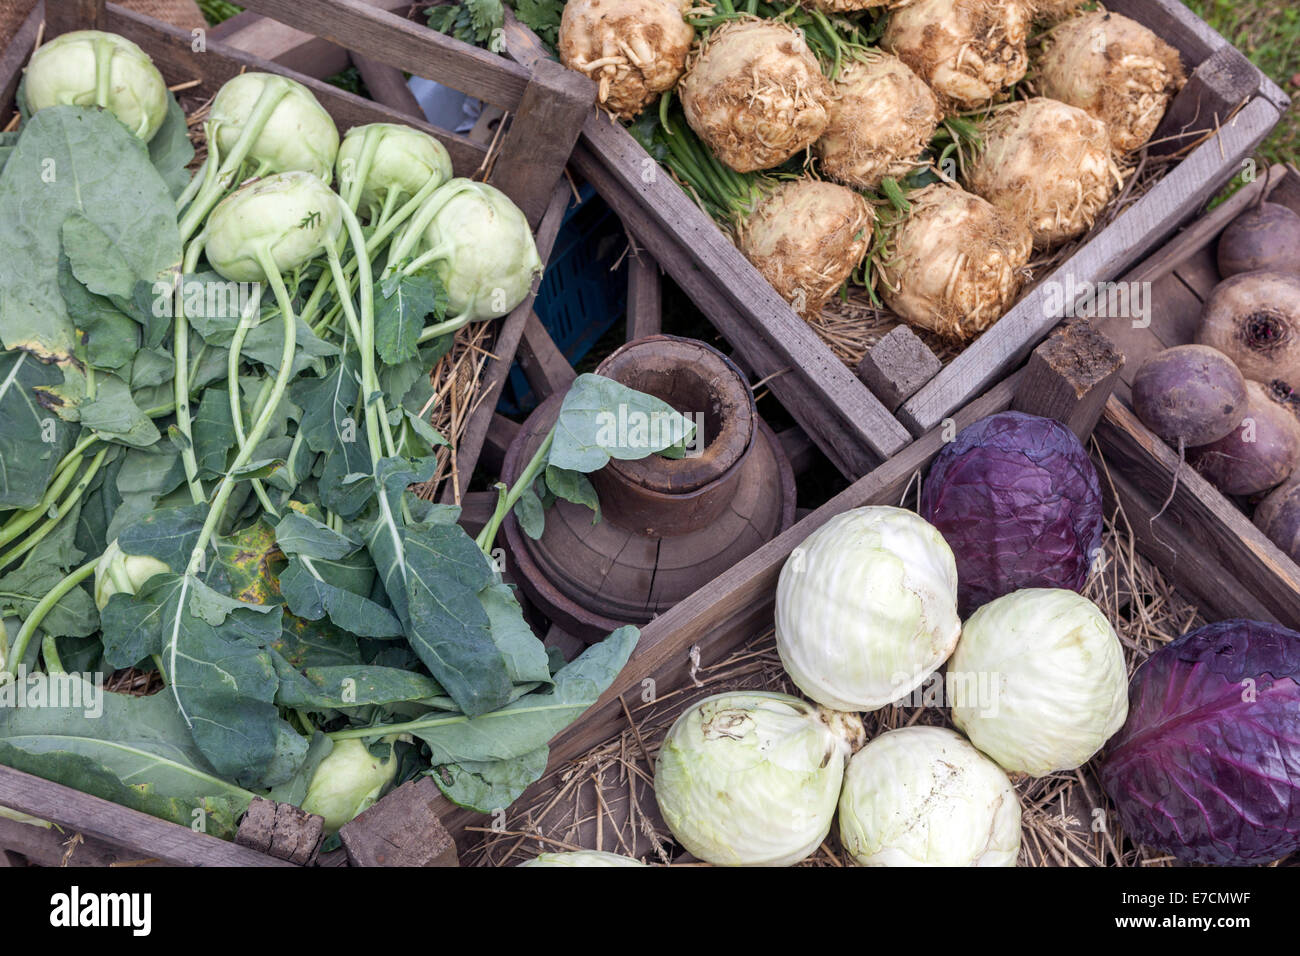 Kohlrabi, celery root, cabbage in farmers market. Stock Photo